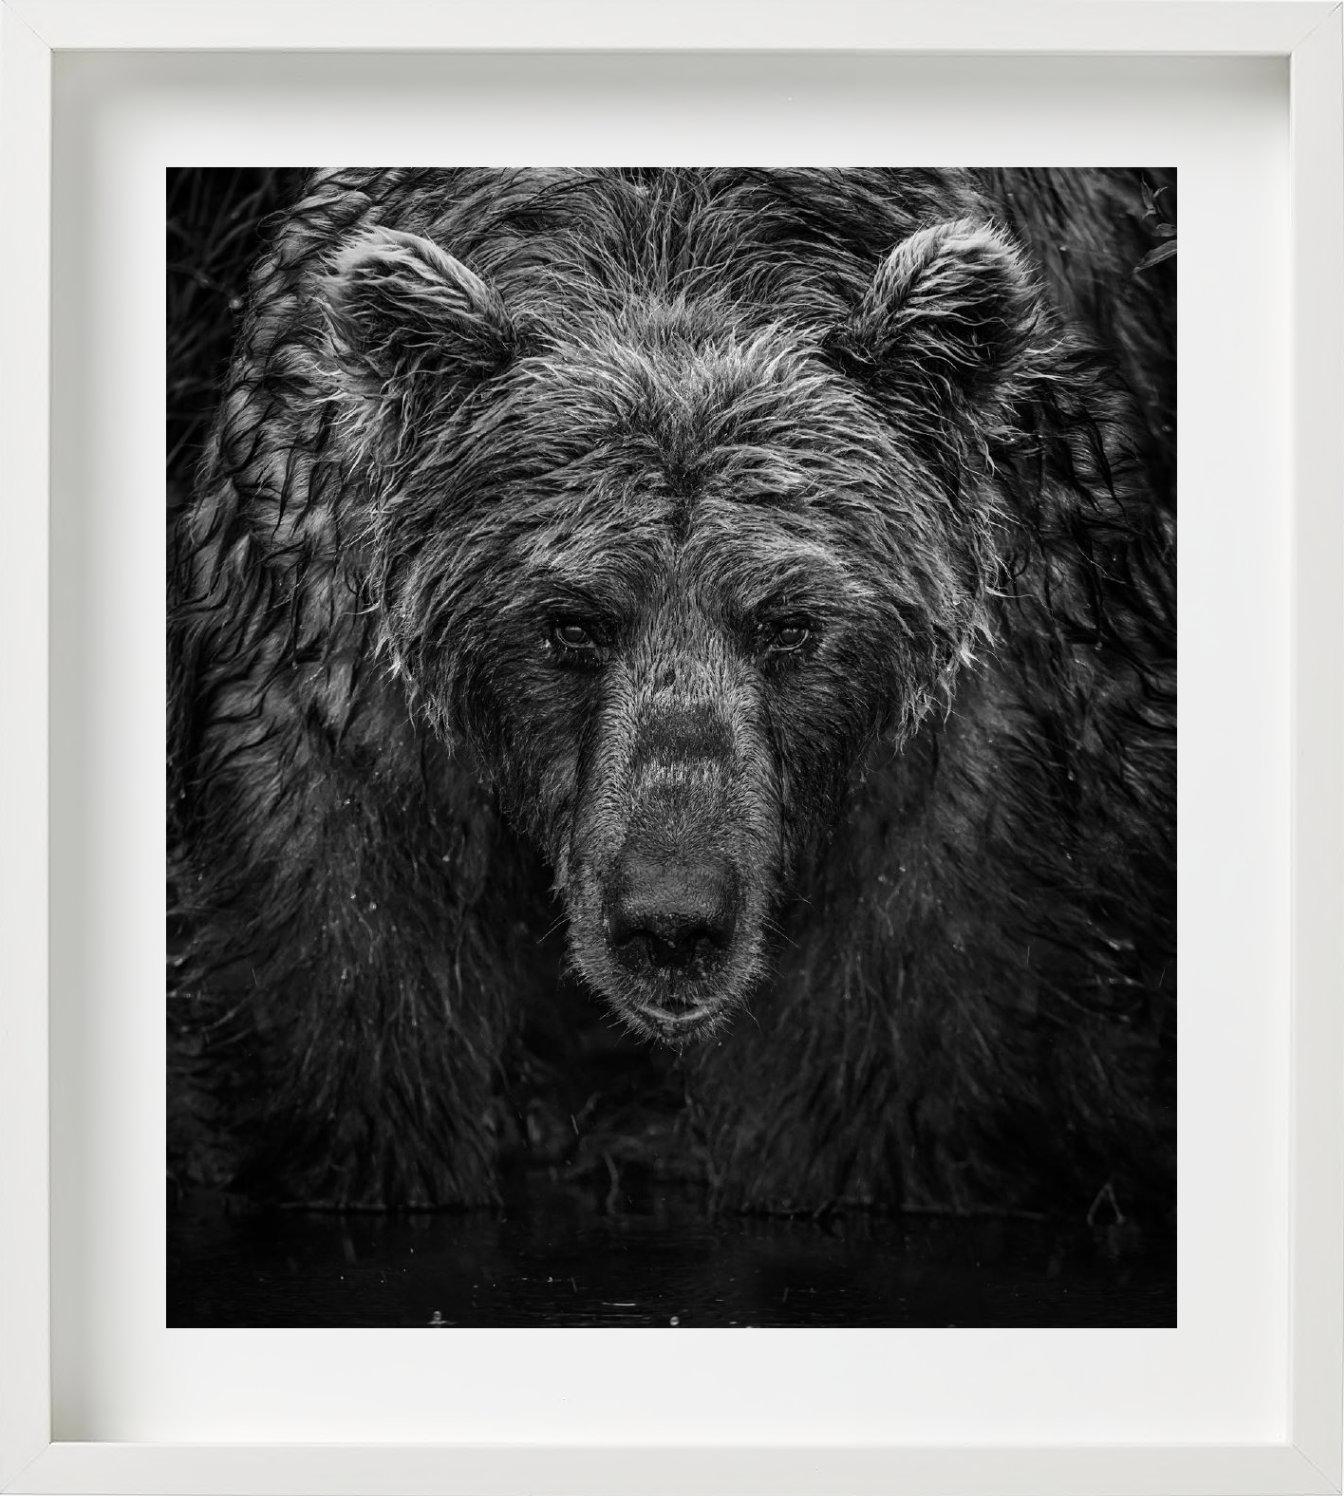 'Wet, Wet, Wet' - portrait of a bear in the rain, fine art photography, 2023 - Photograph by David Yarrow